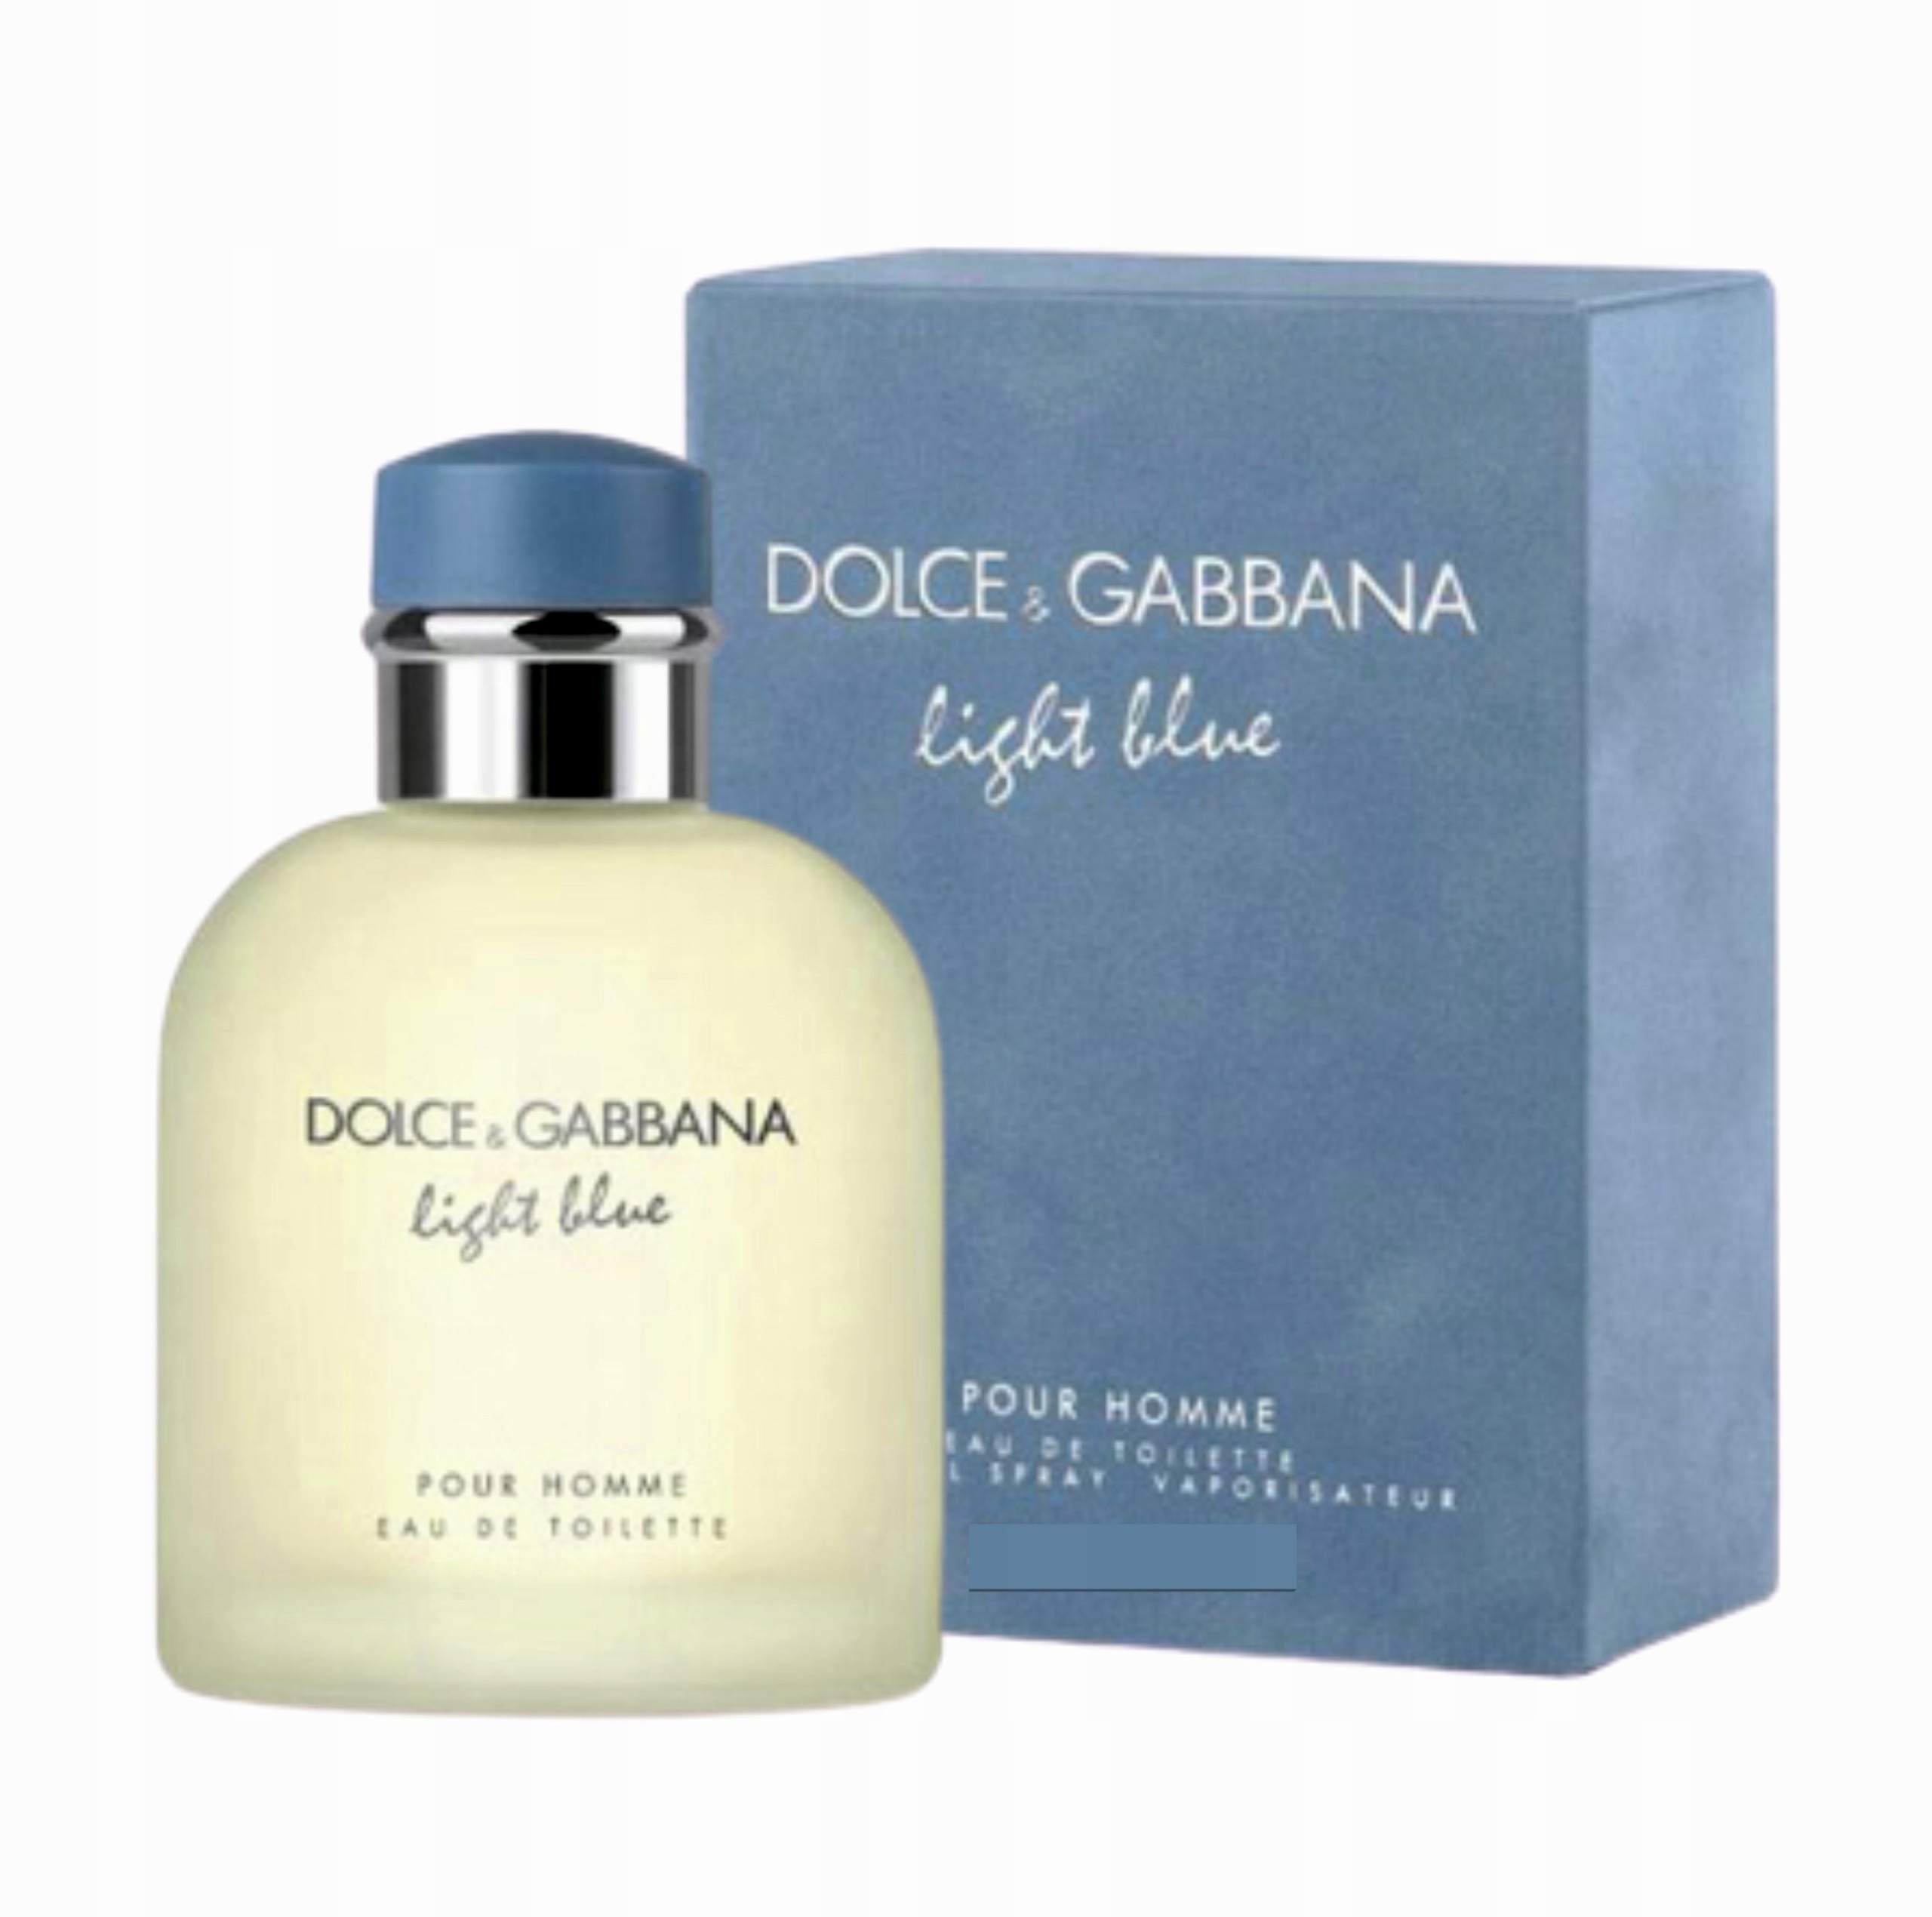 Дольче габбана пур хом. Dolce Gabbana Light Blue 125ml. Dolce Gabbana Lite Blue 40 ml. Дольче Габбана духи мужские Light Blue. Dolce & Gabbana Light Blue pour homme 40 мл.